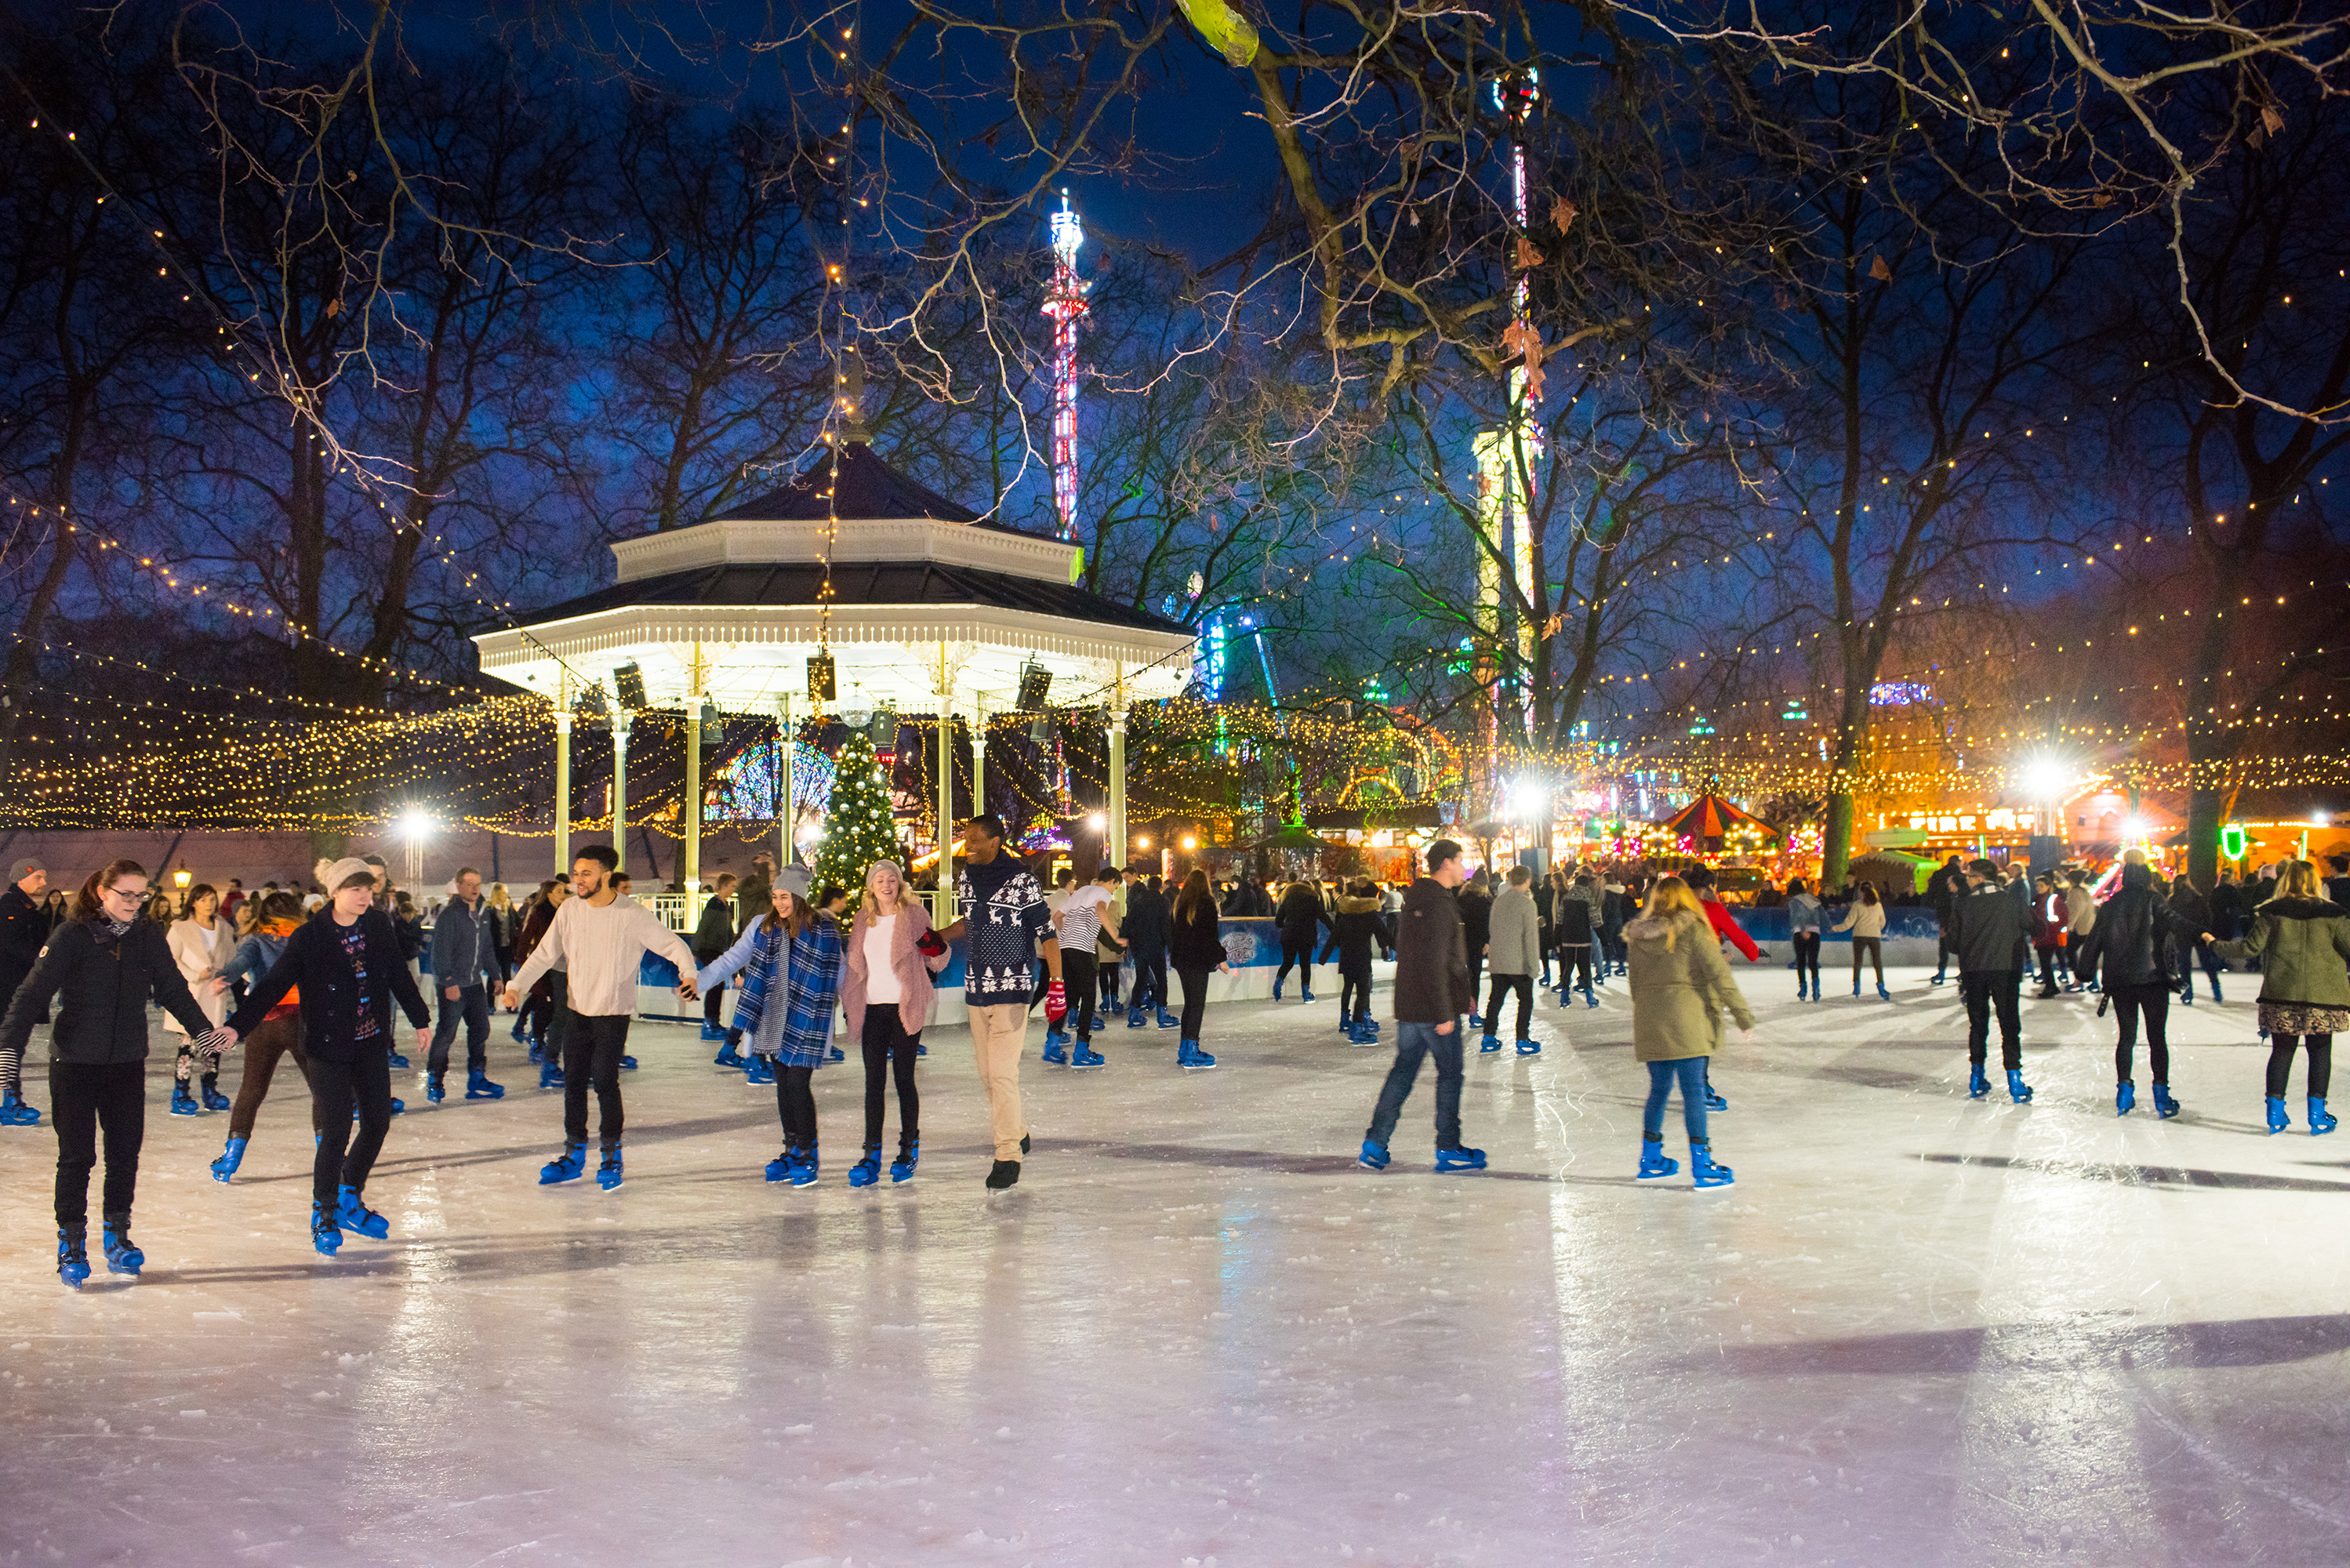 Visit Hyde Park Winter Wonderland- A Christmas Extravaganza